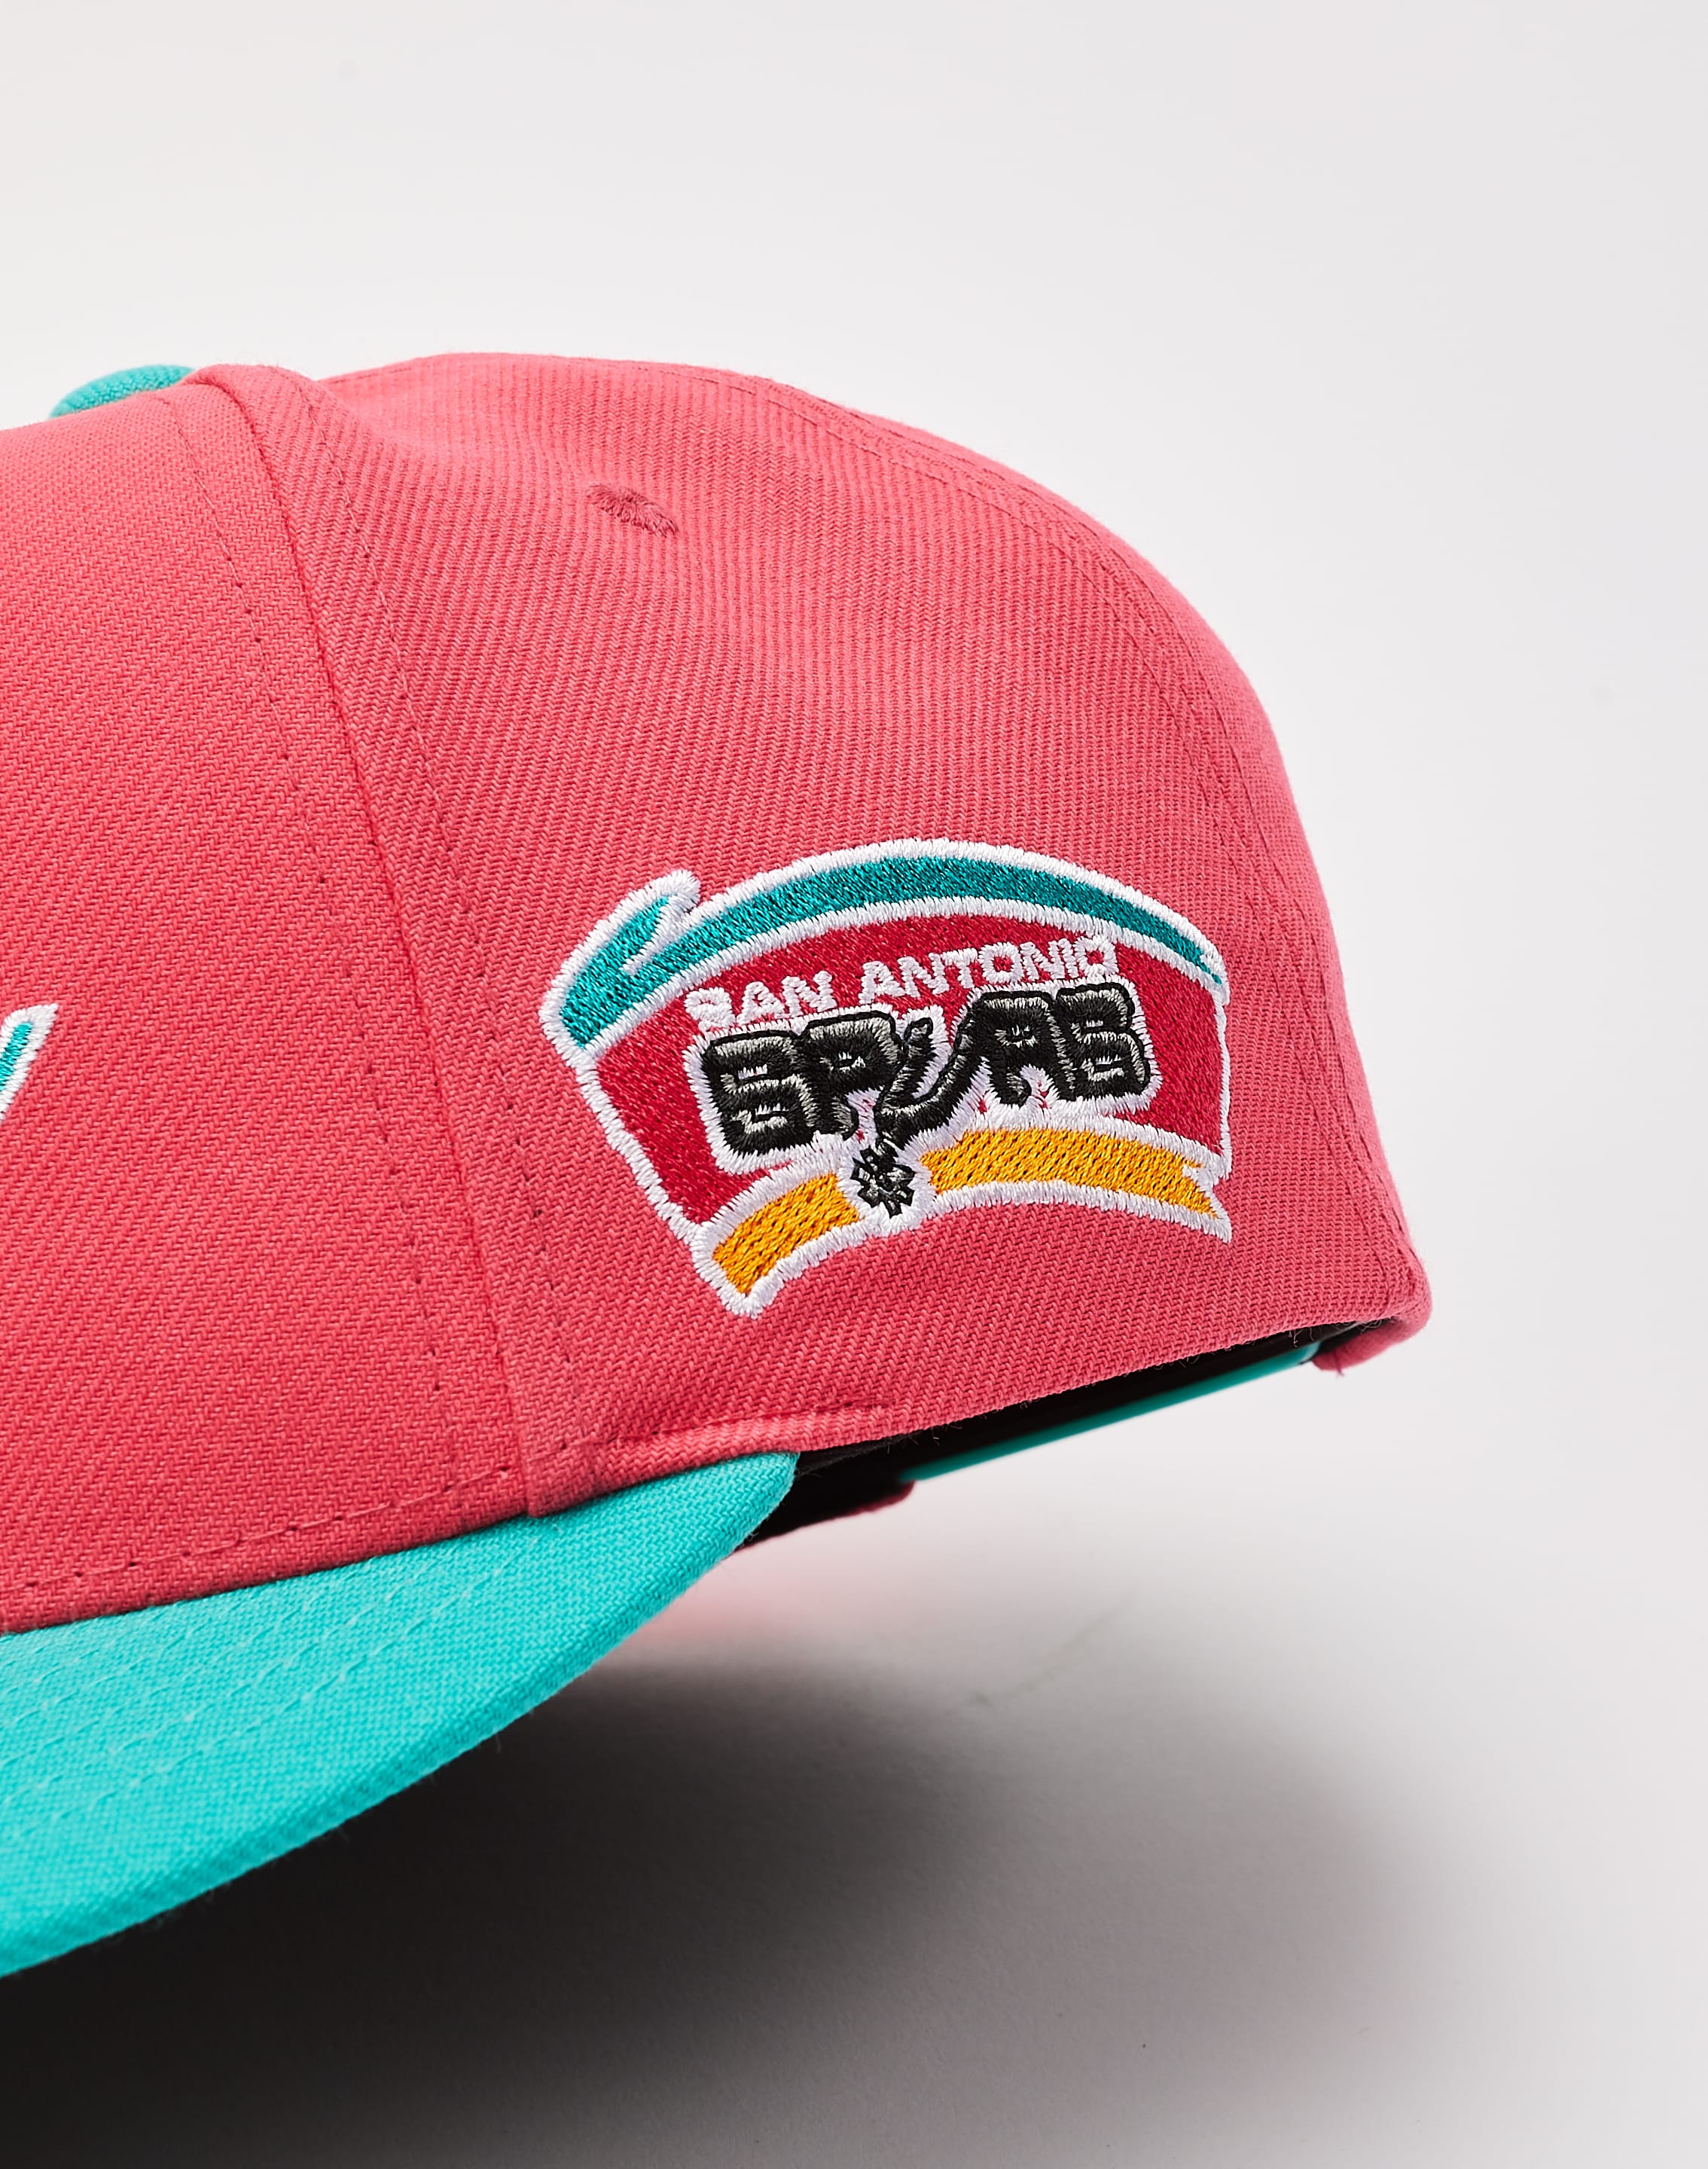 Mitchell & Ness San Antonio Spurs Snapback Hat - White/Pink/Throwback Logo  - Basketball Cap